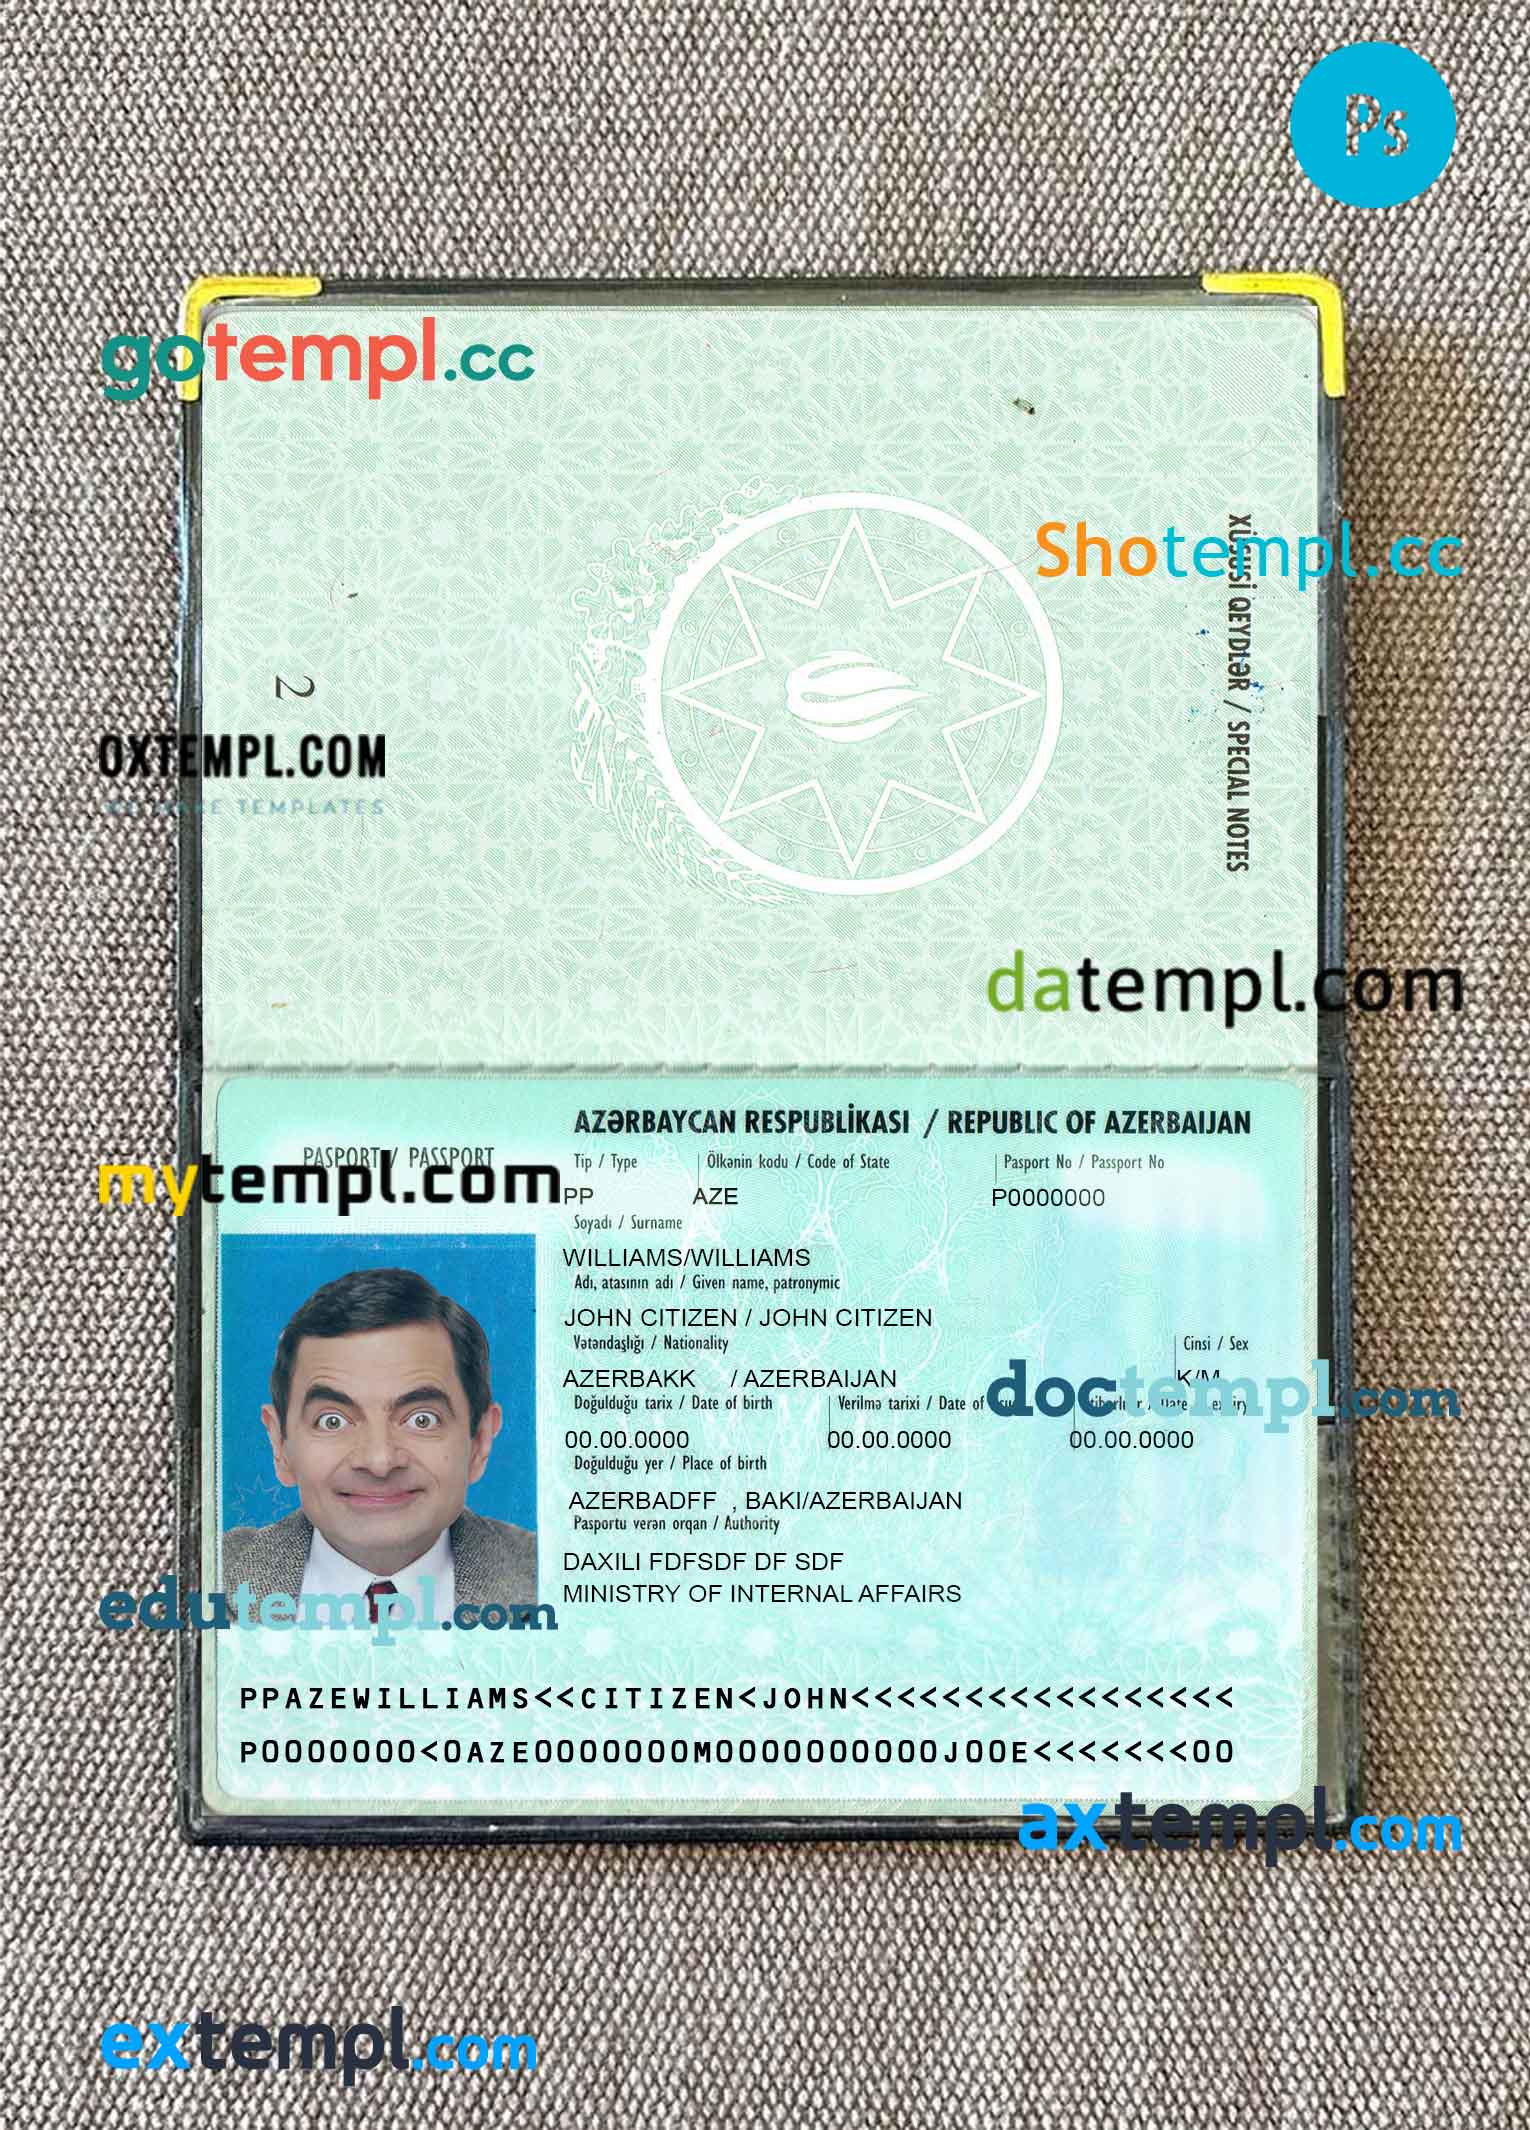 Azerbaijan passport editable PSD files, scan and photo-realistic look, 2 in 1